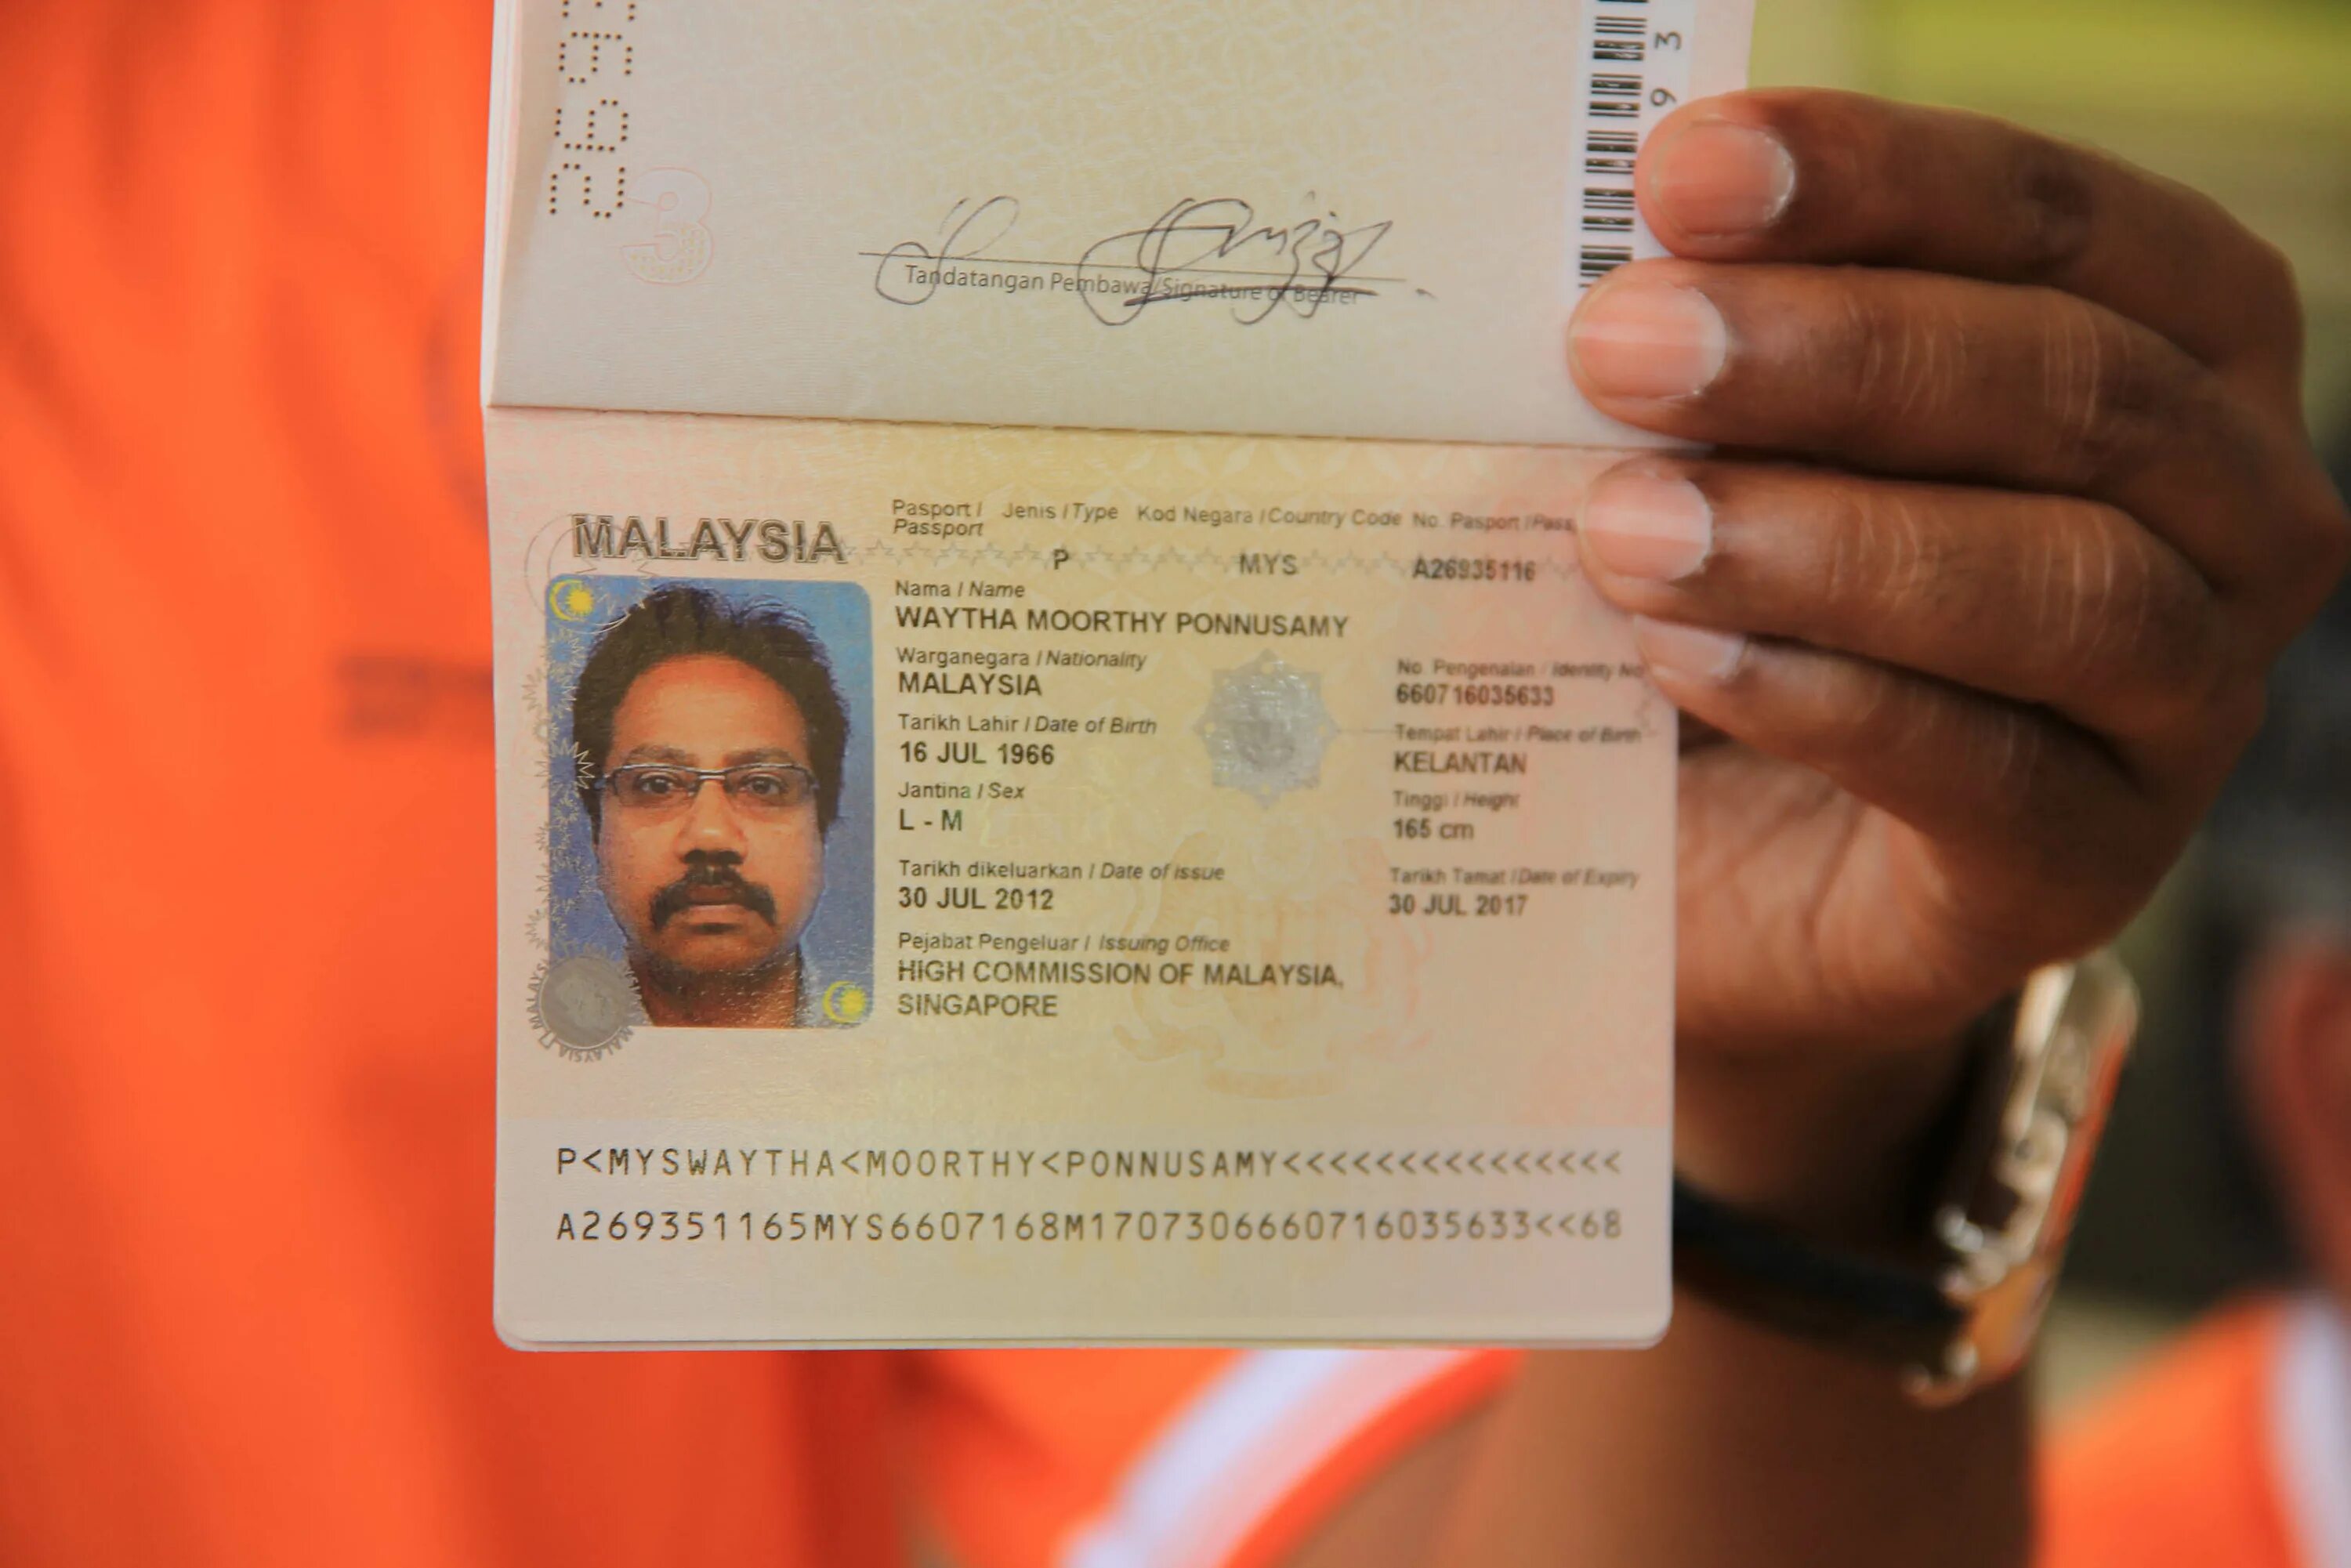 Passport issued. Паспортизация в Индии.